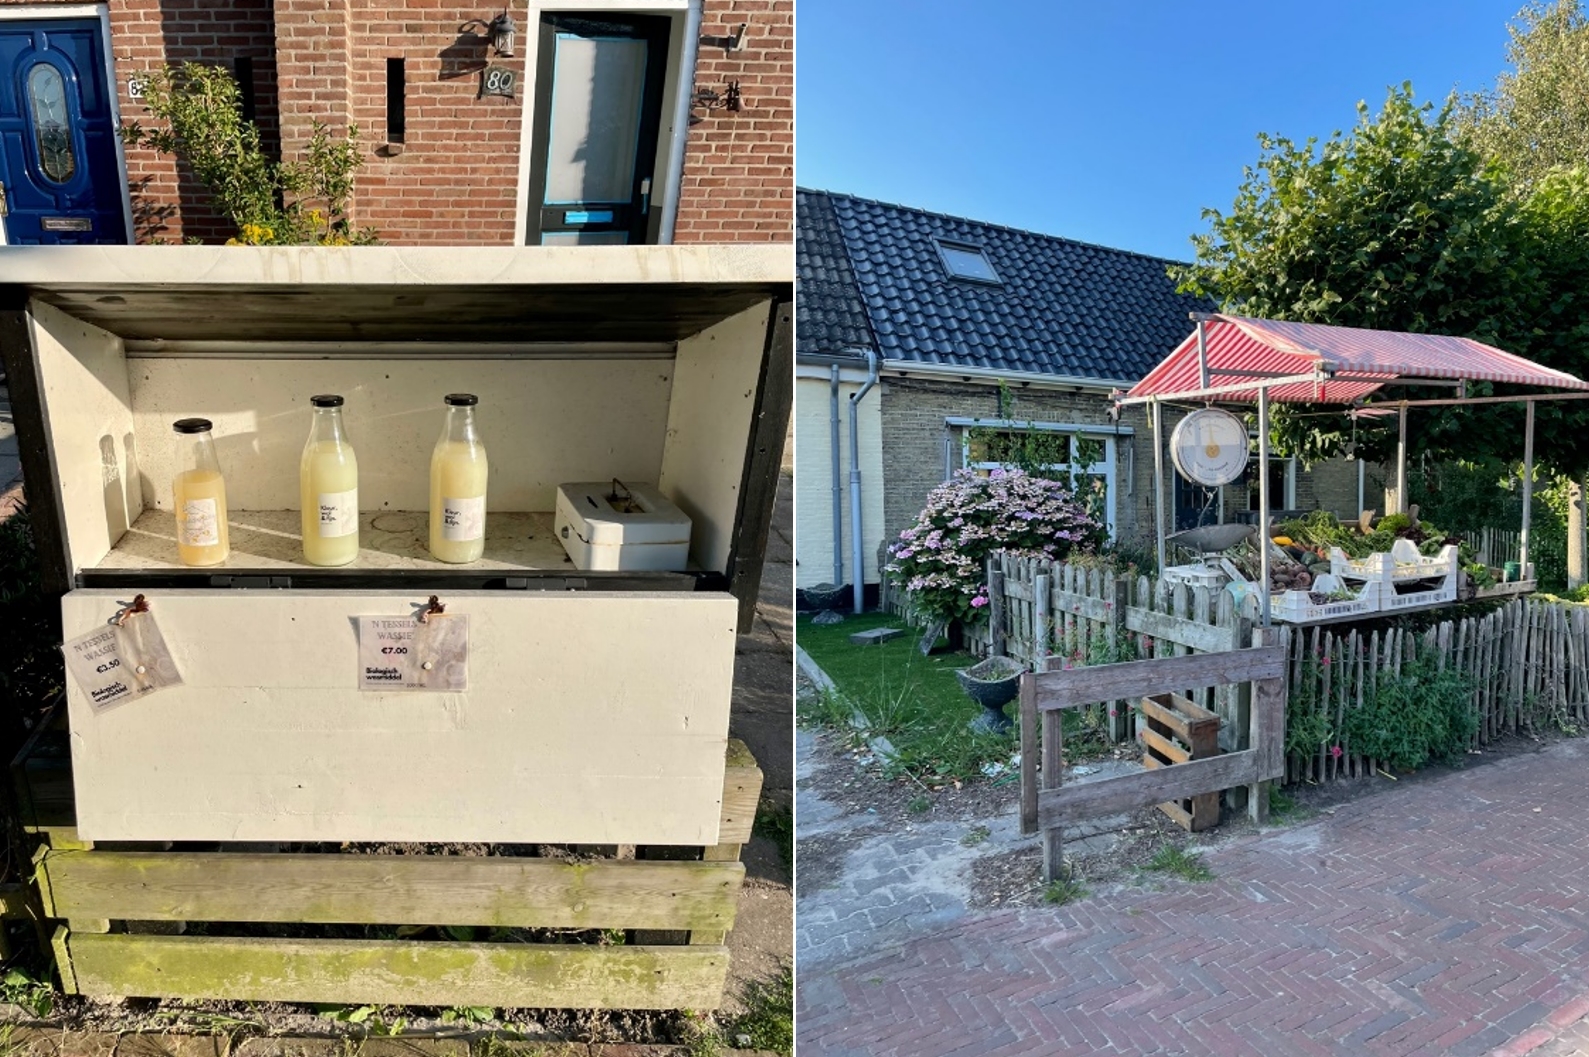 At Hoek van Holland, in the Netherlands